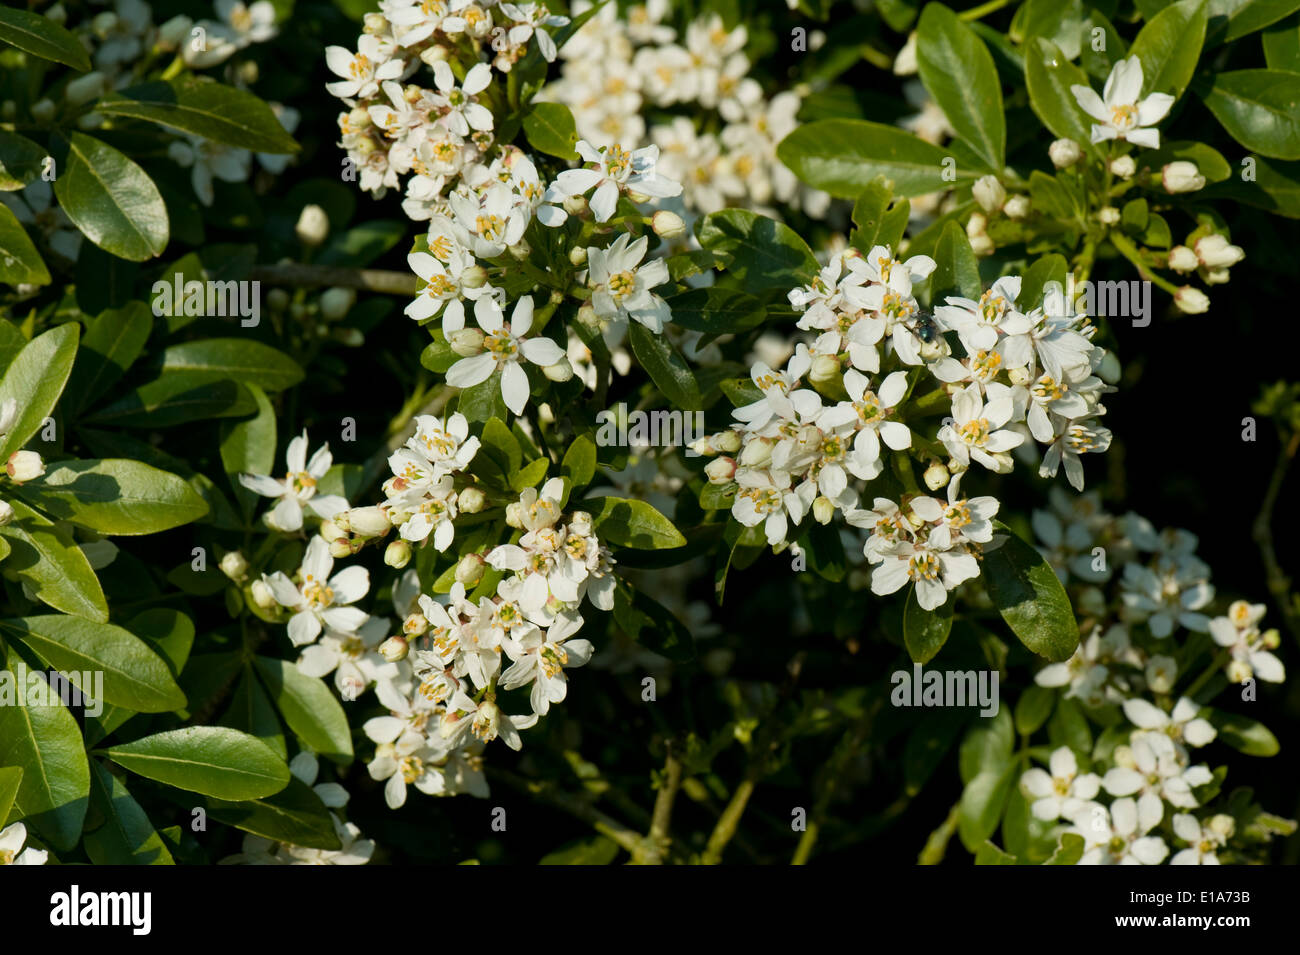 Mexicana o simulacros de naranja, Choisya ternata, arbusto con flores blancas muy perfumadas flores Foto de stock